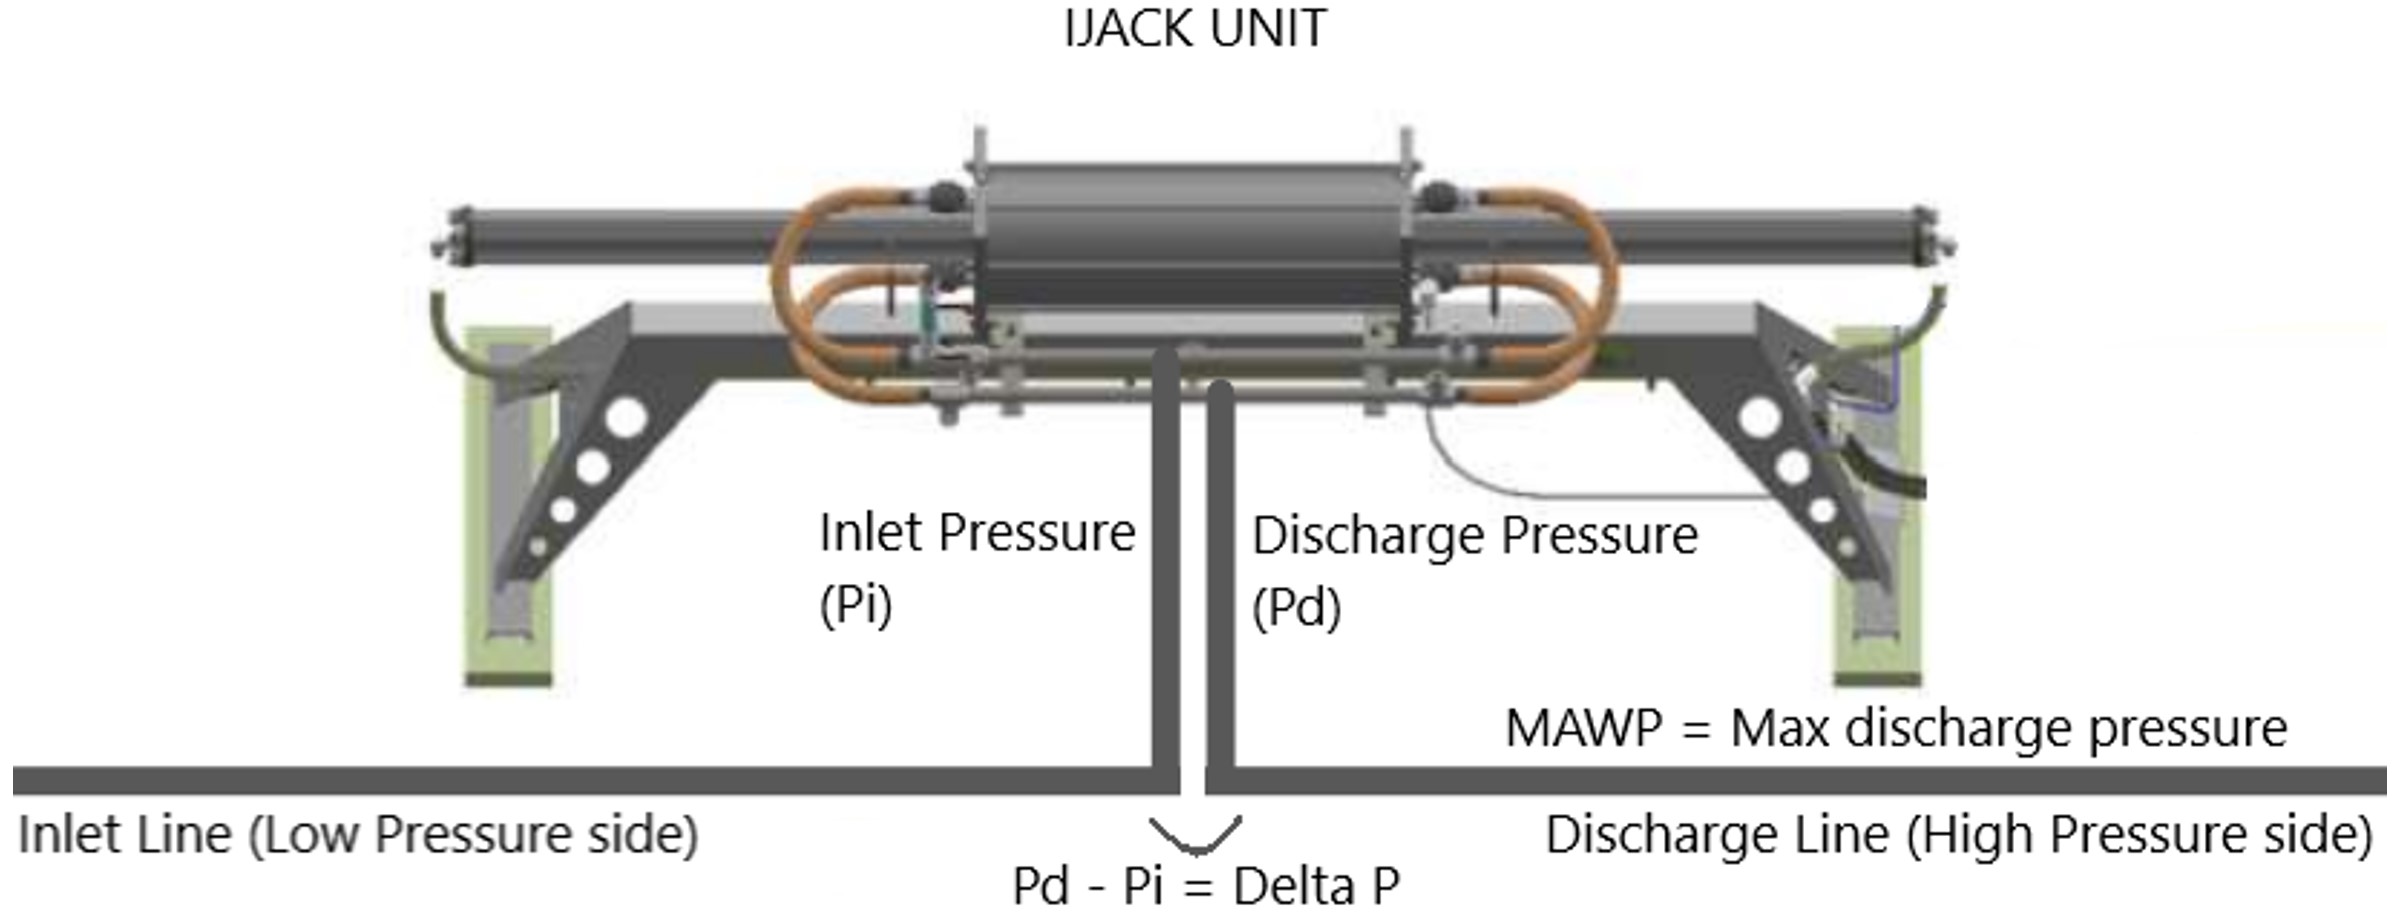 IJACK XFER inlet and discharge pressure diagram